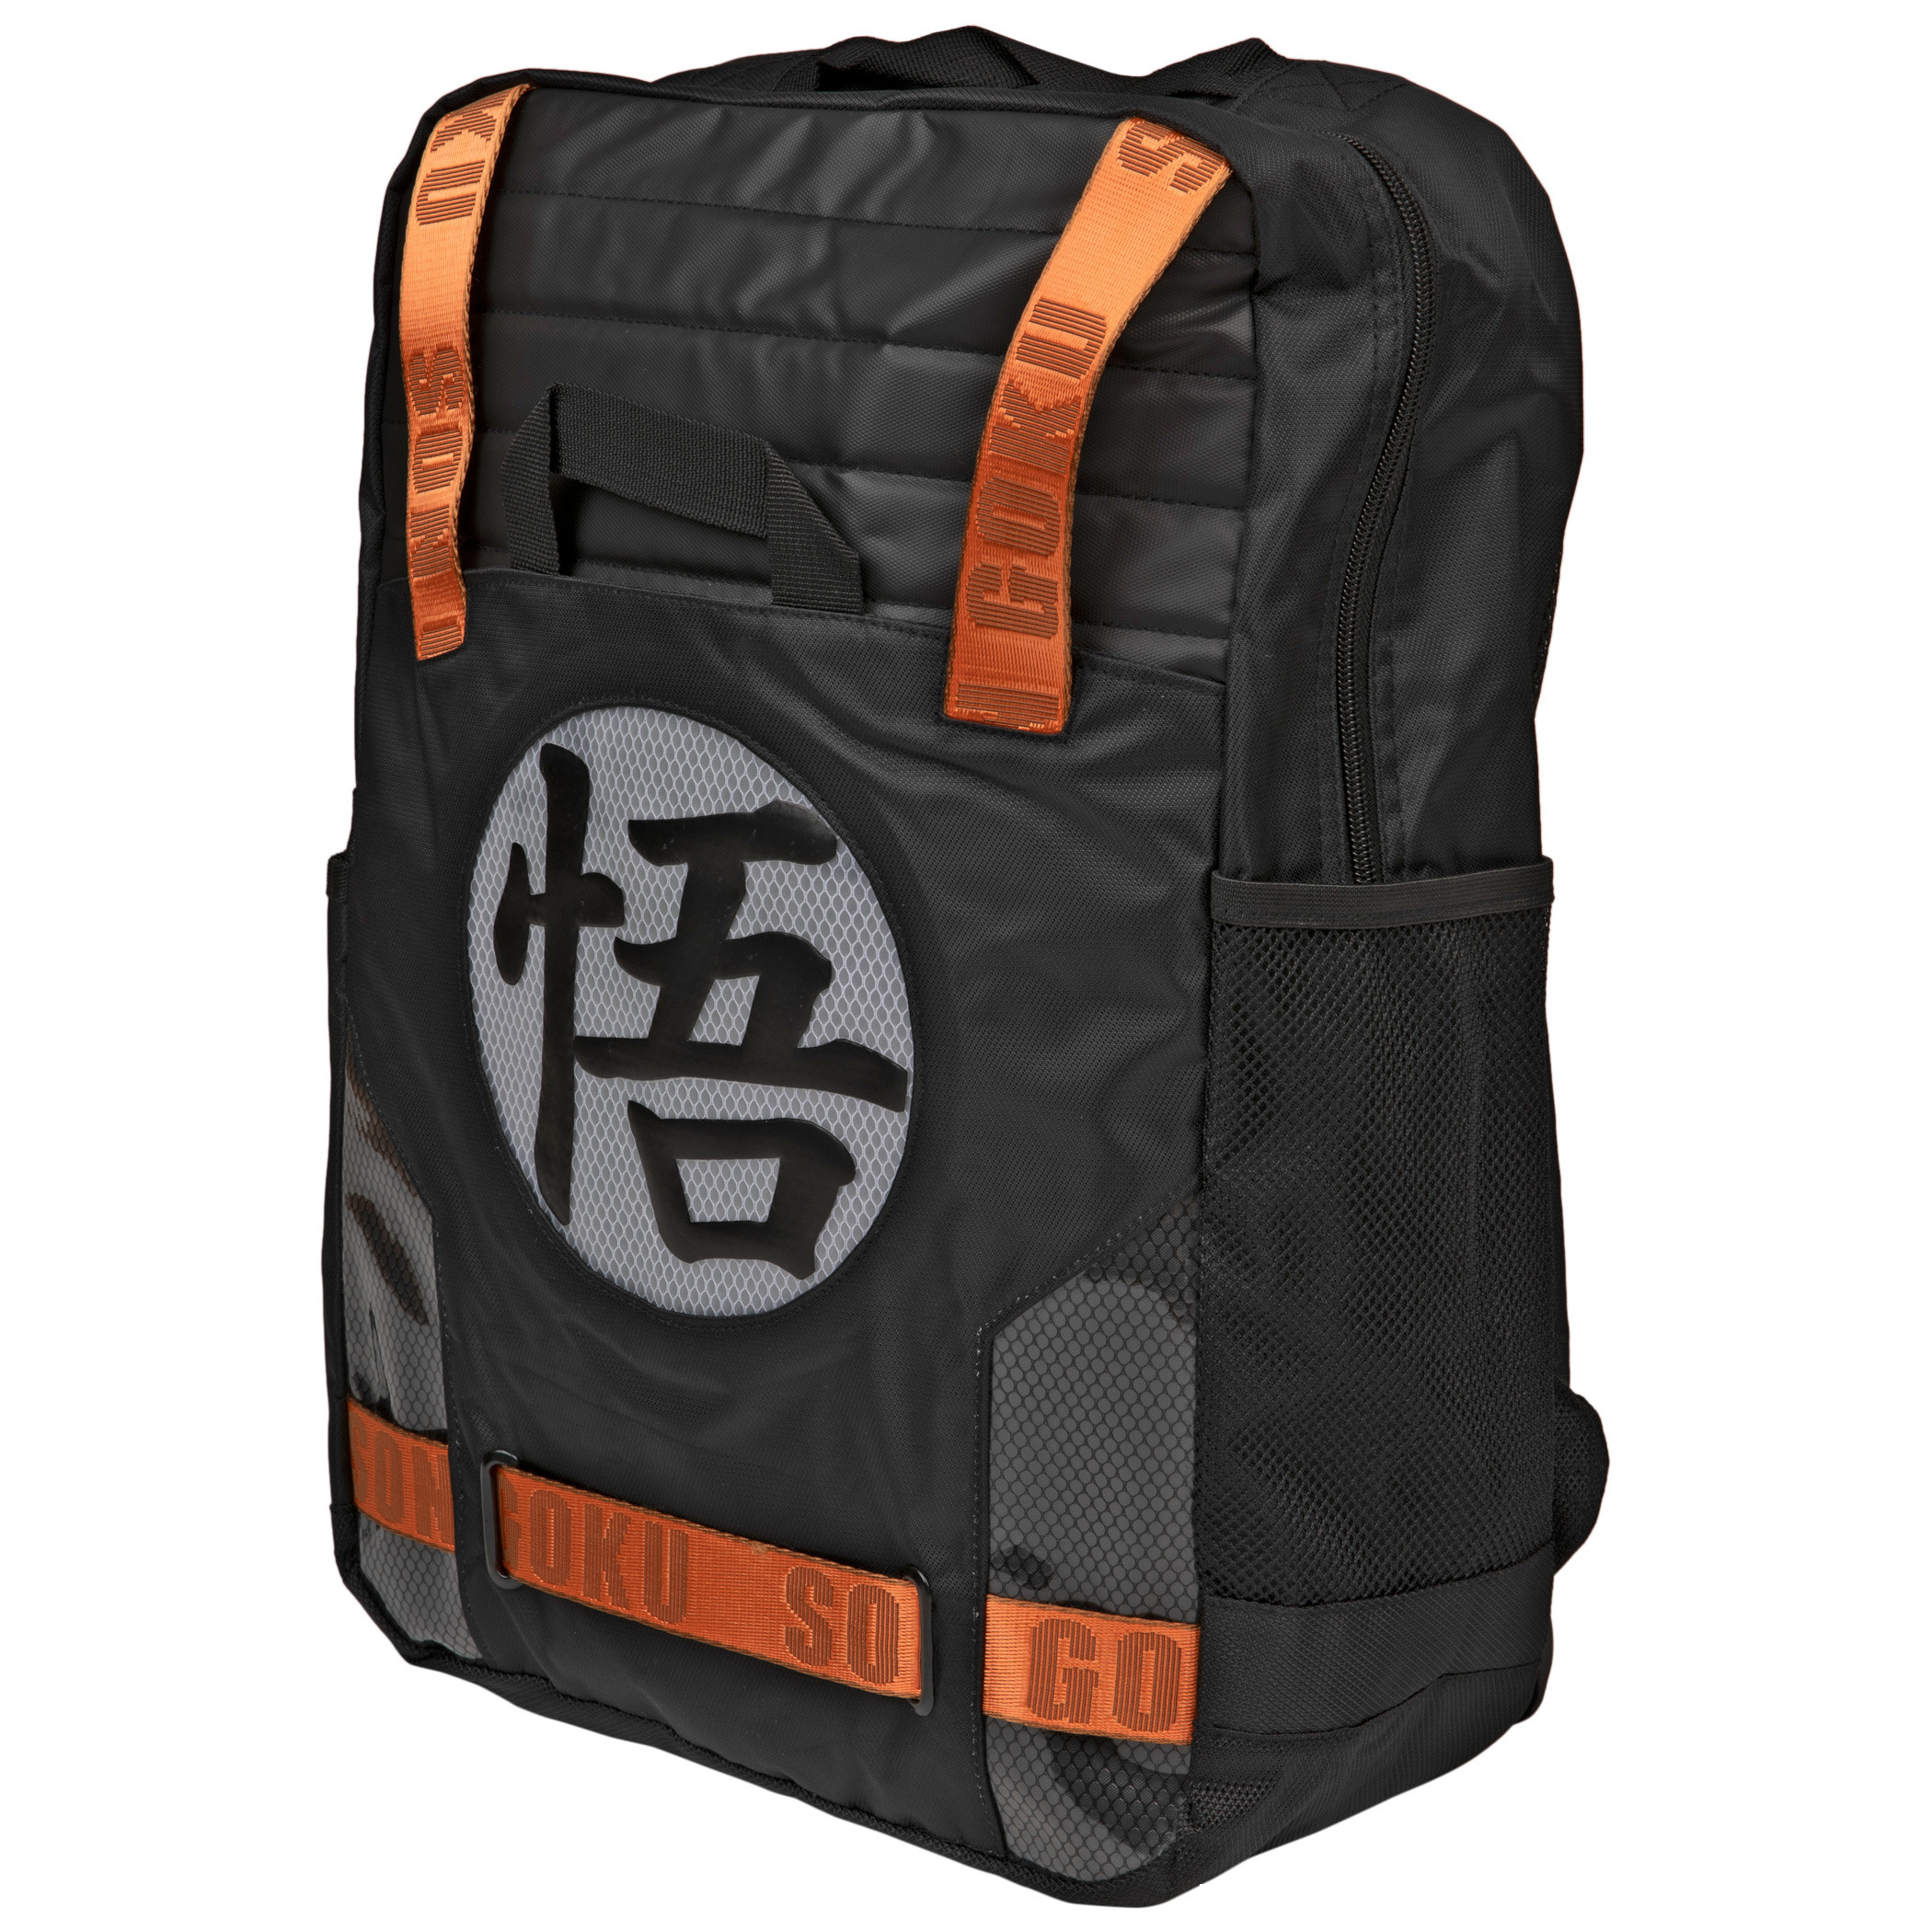 Dragon Ball Z Strap Backpack